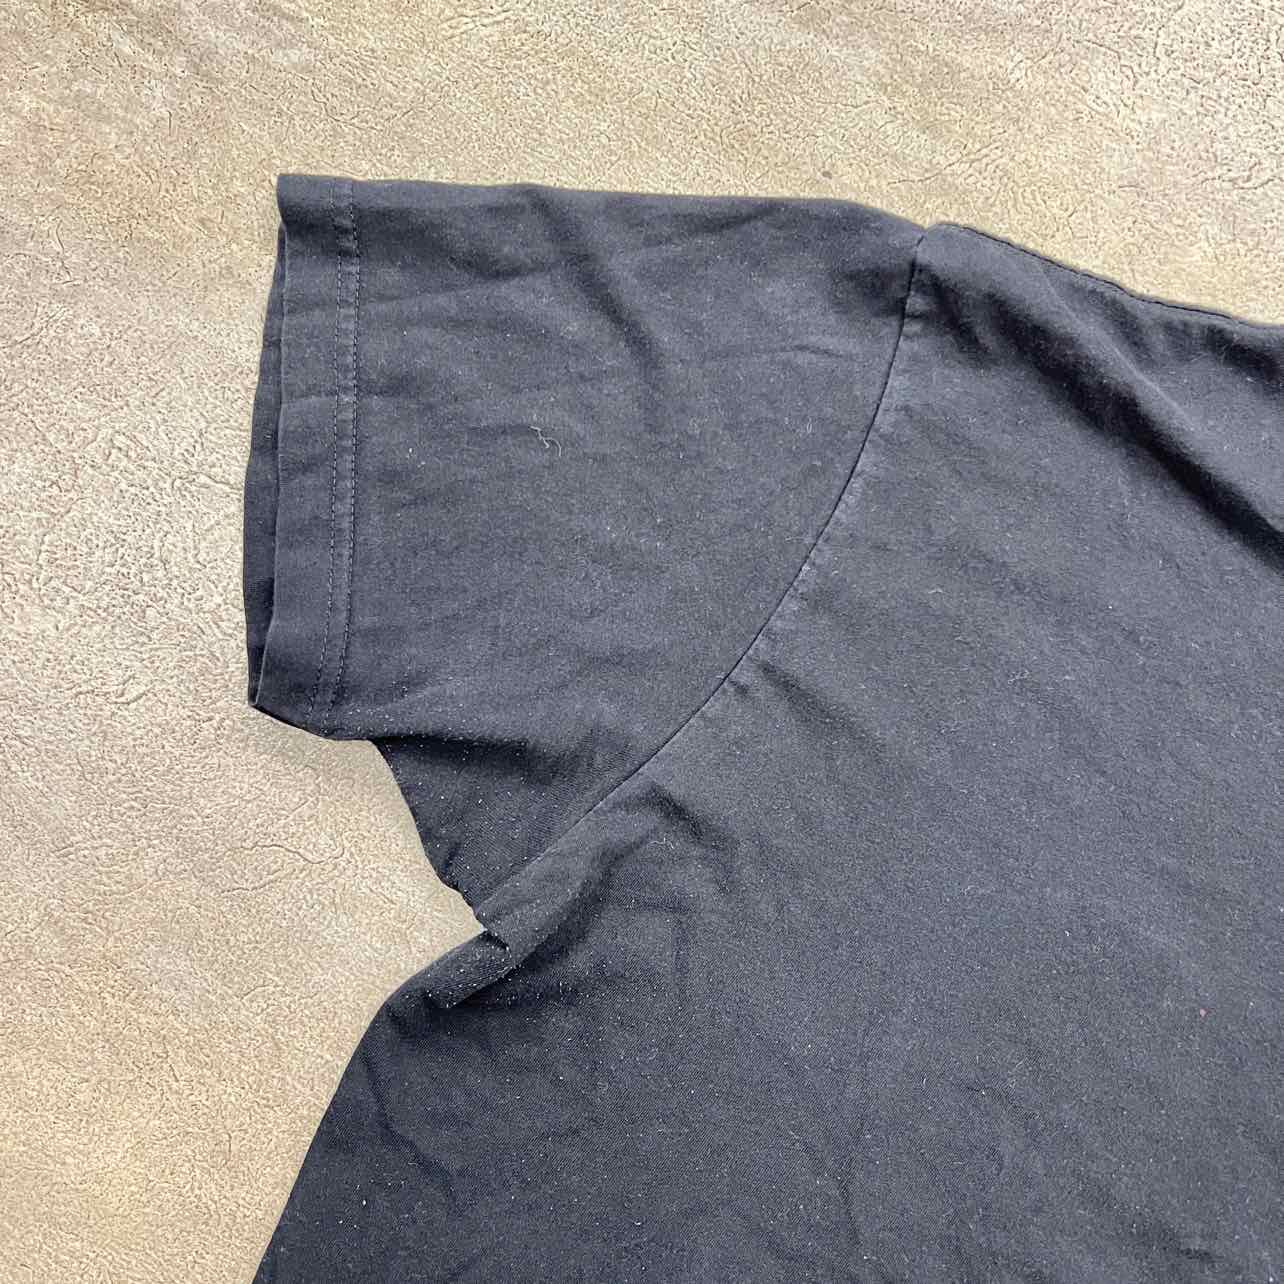 Chrome Hearts T-Shirt &quot;MALIBU&quot; Black Used Size 2XL